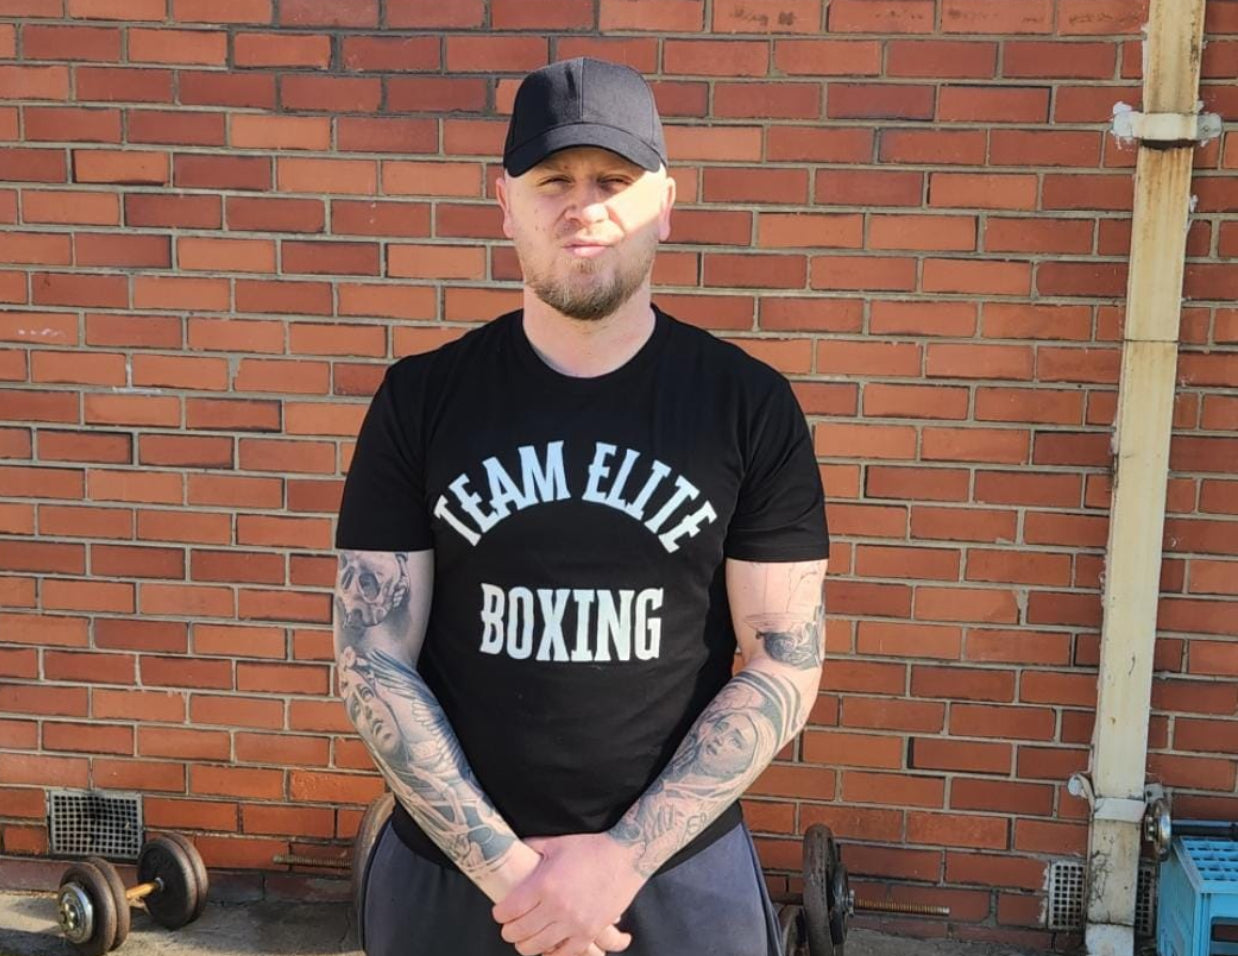 Men’s Team Elite Boxing T-shirt